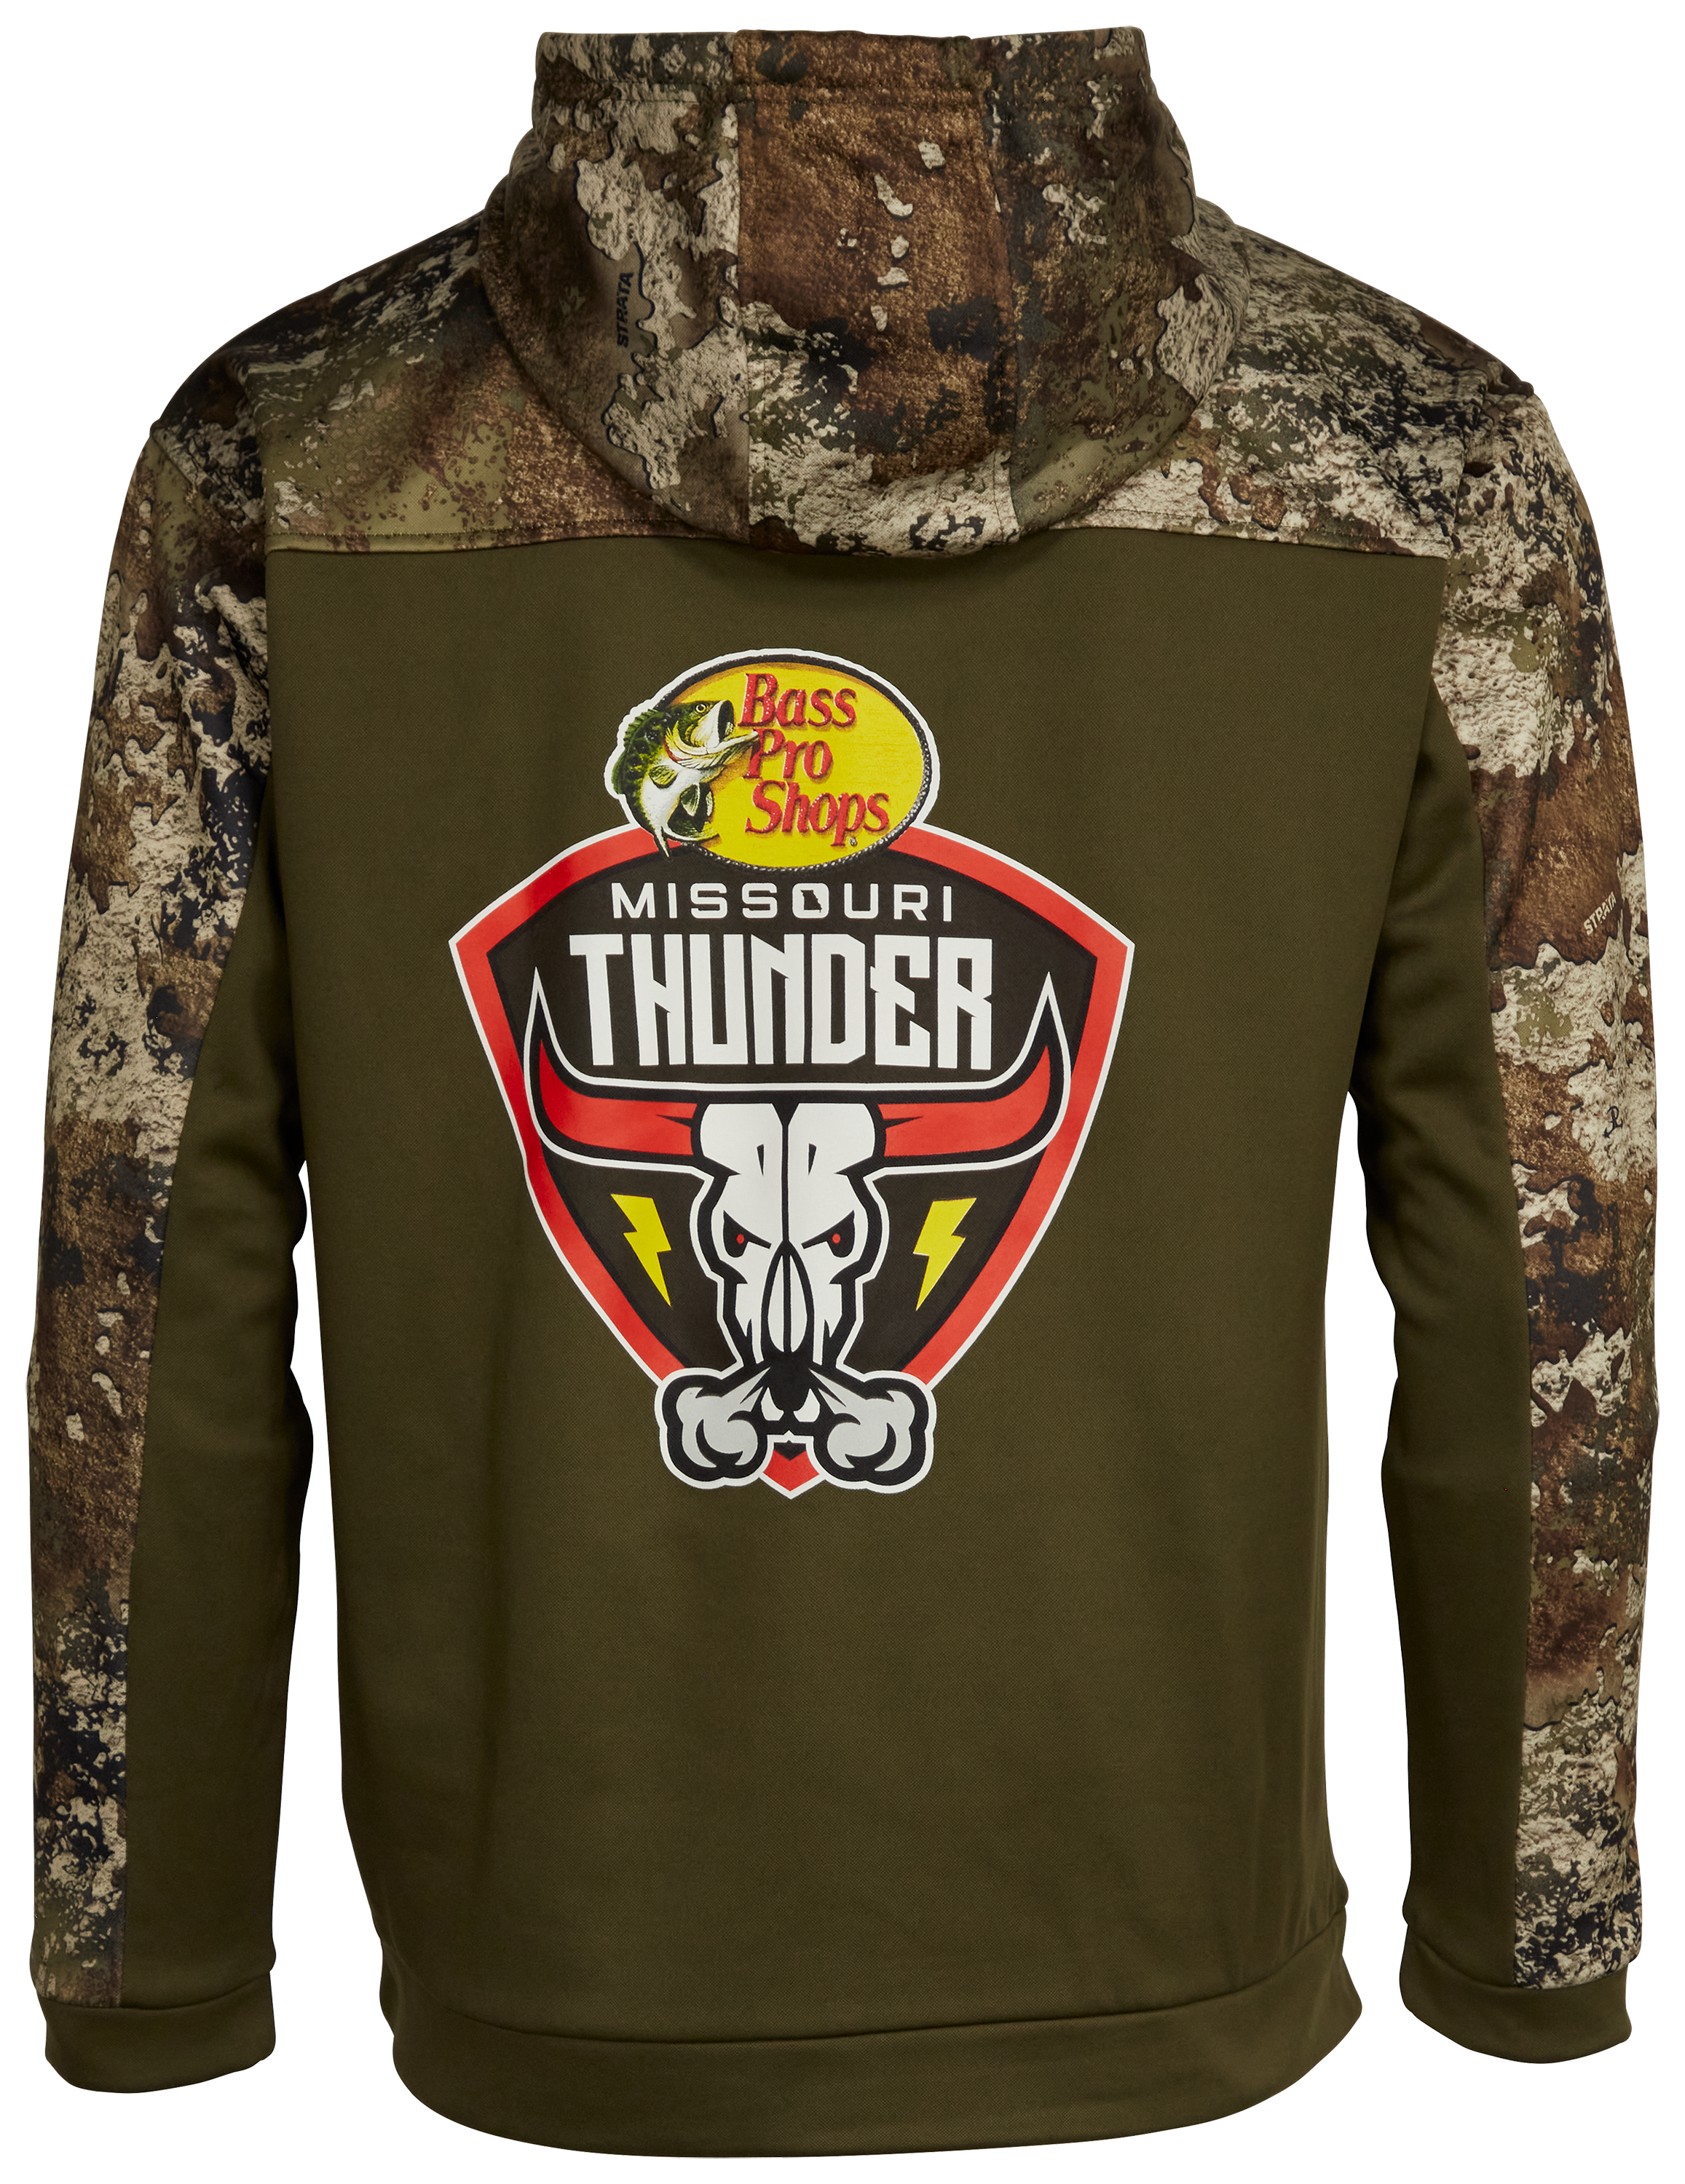 Bass Pro Shops Missouri Thunder Hoodie for Men - Olive/TrueTimber Strata - 2XL